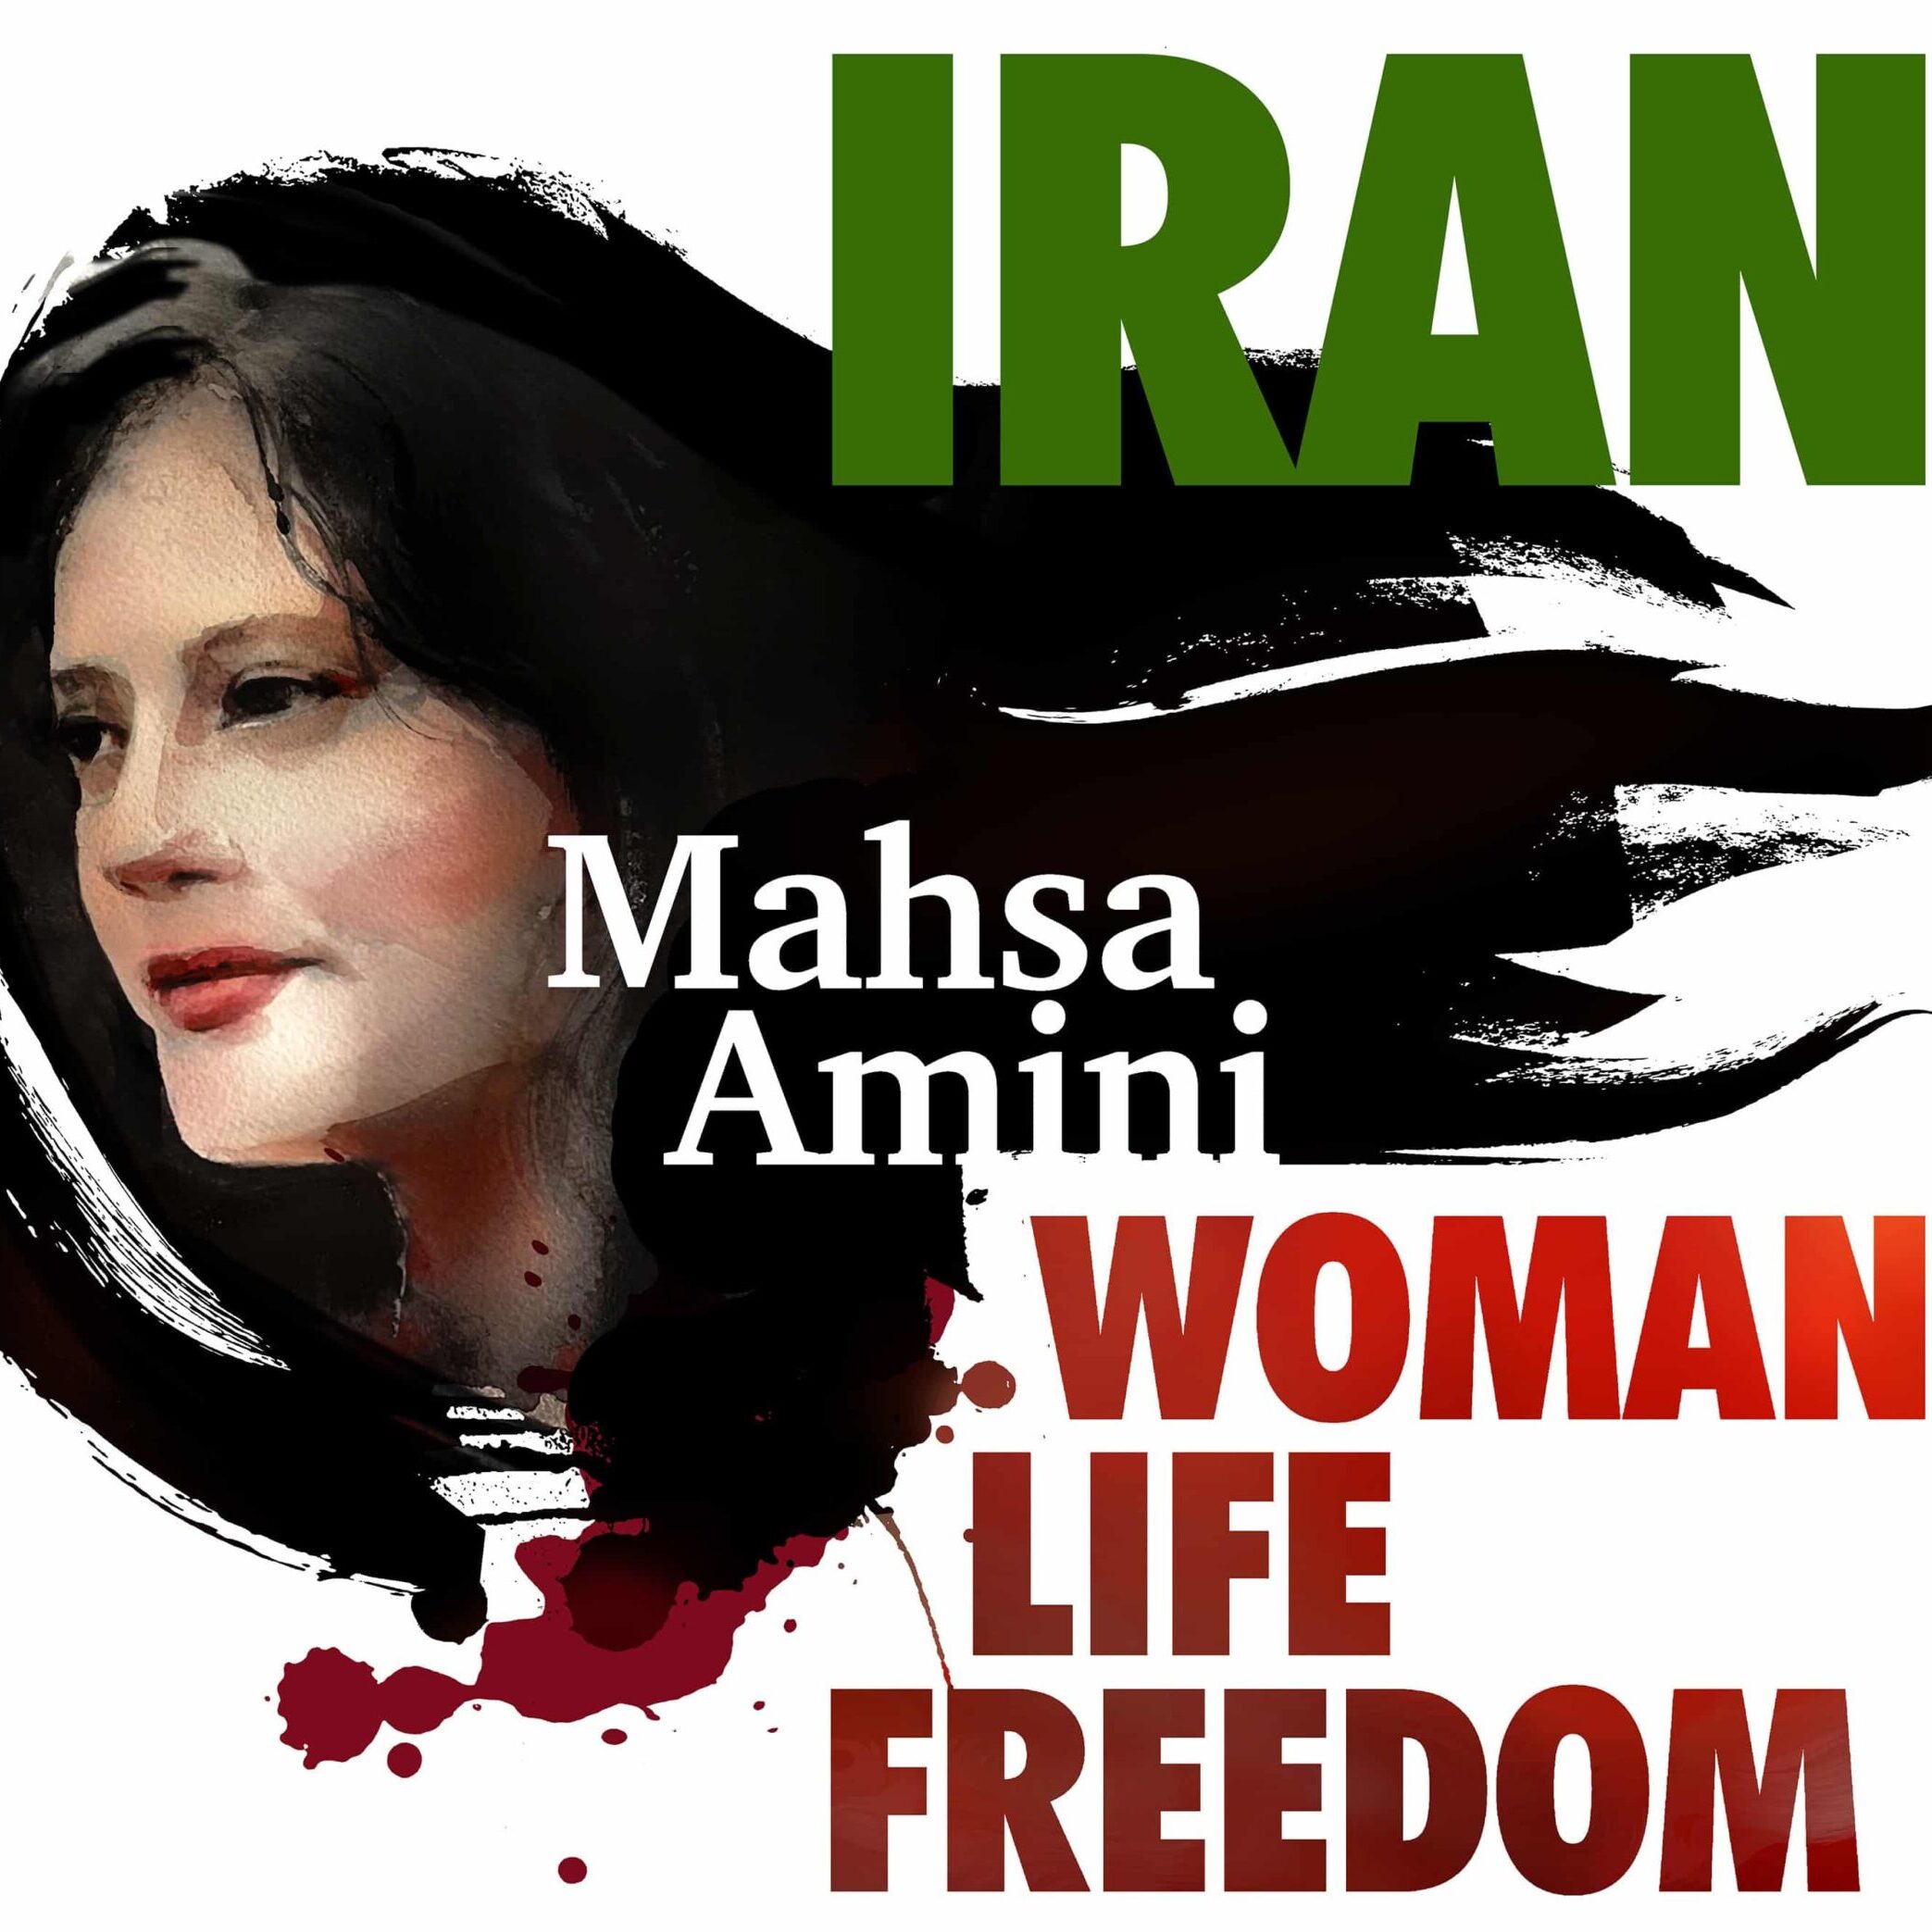 Mahsa Amini Woman Life Freedom-Updated-2